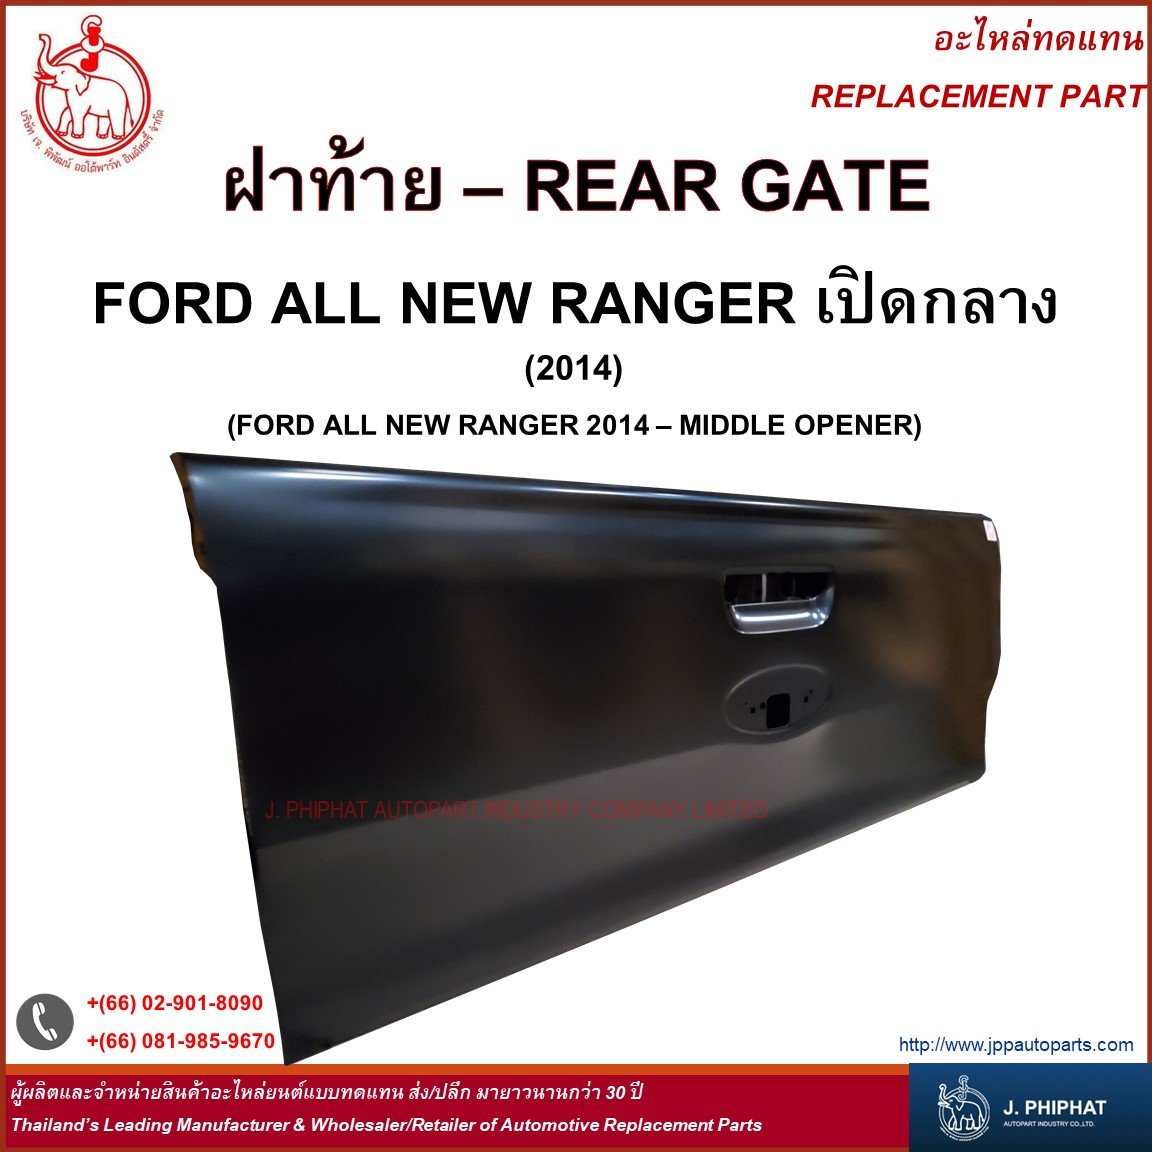 REAR GATE - FORD ALL NEW RANGER 2014 MIDDLE OPENER